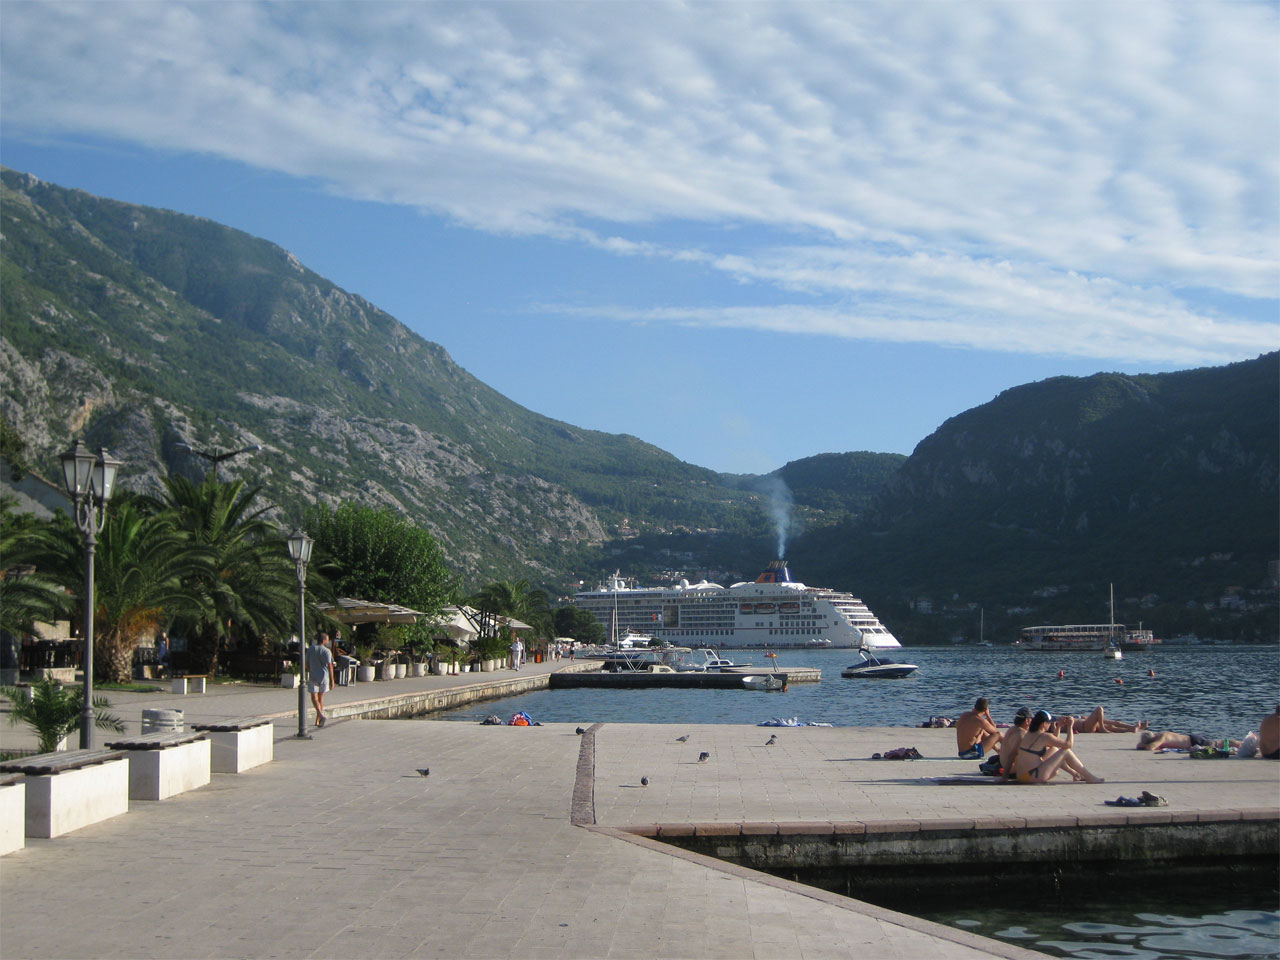 Kotor old town hidden behind a cruise ship, Montenegro